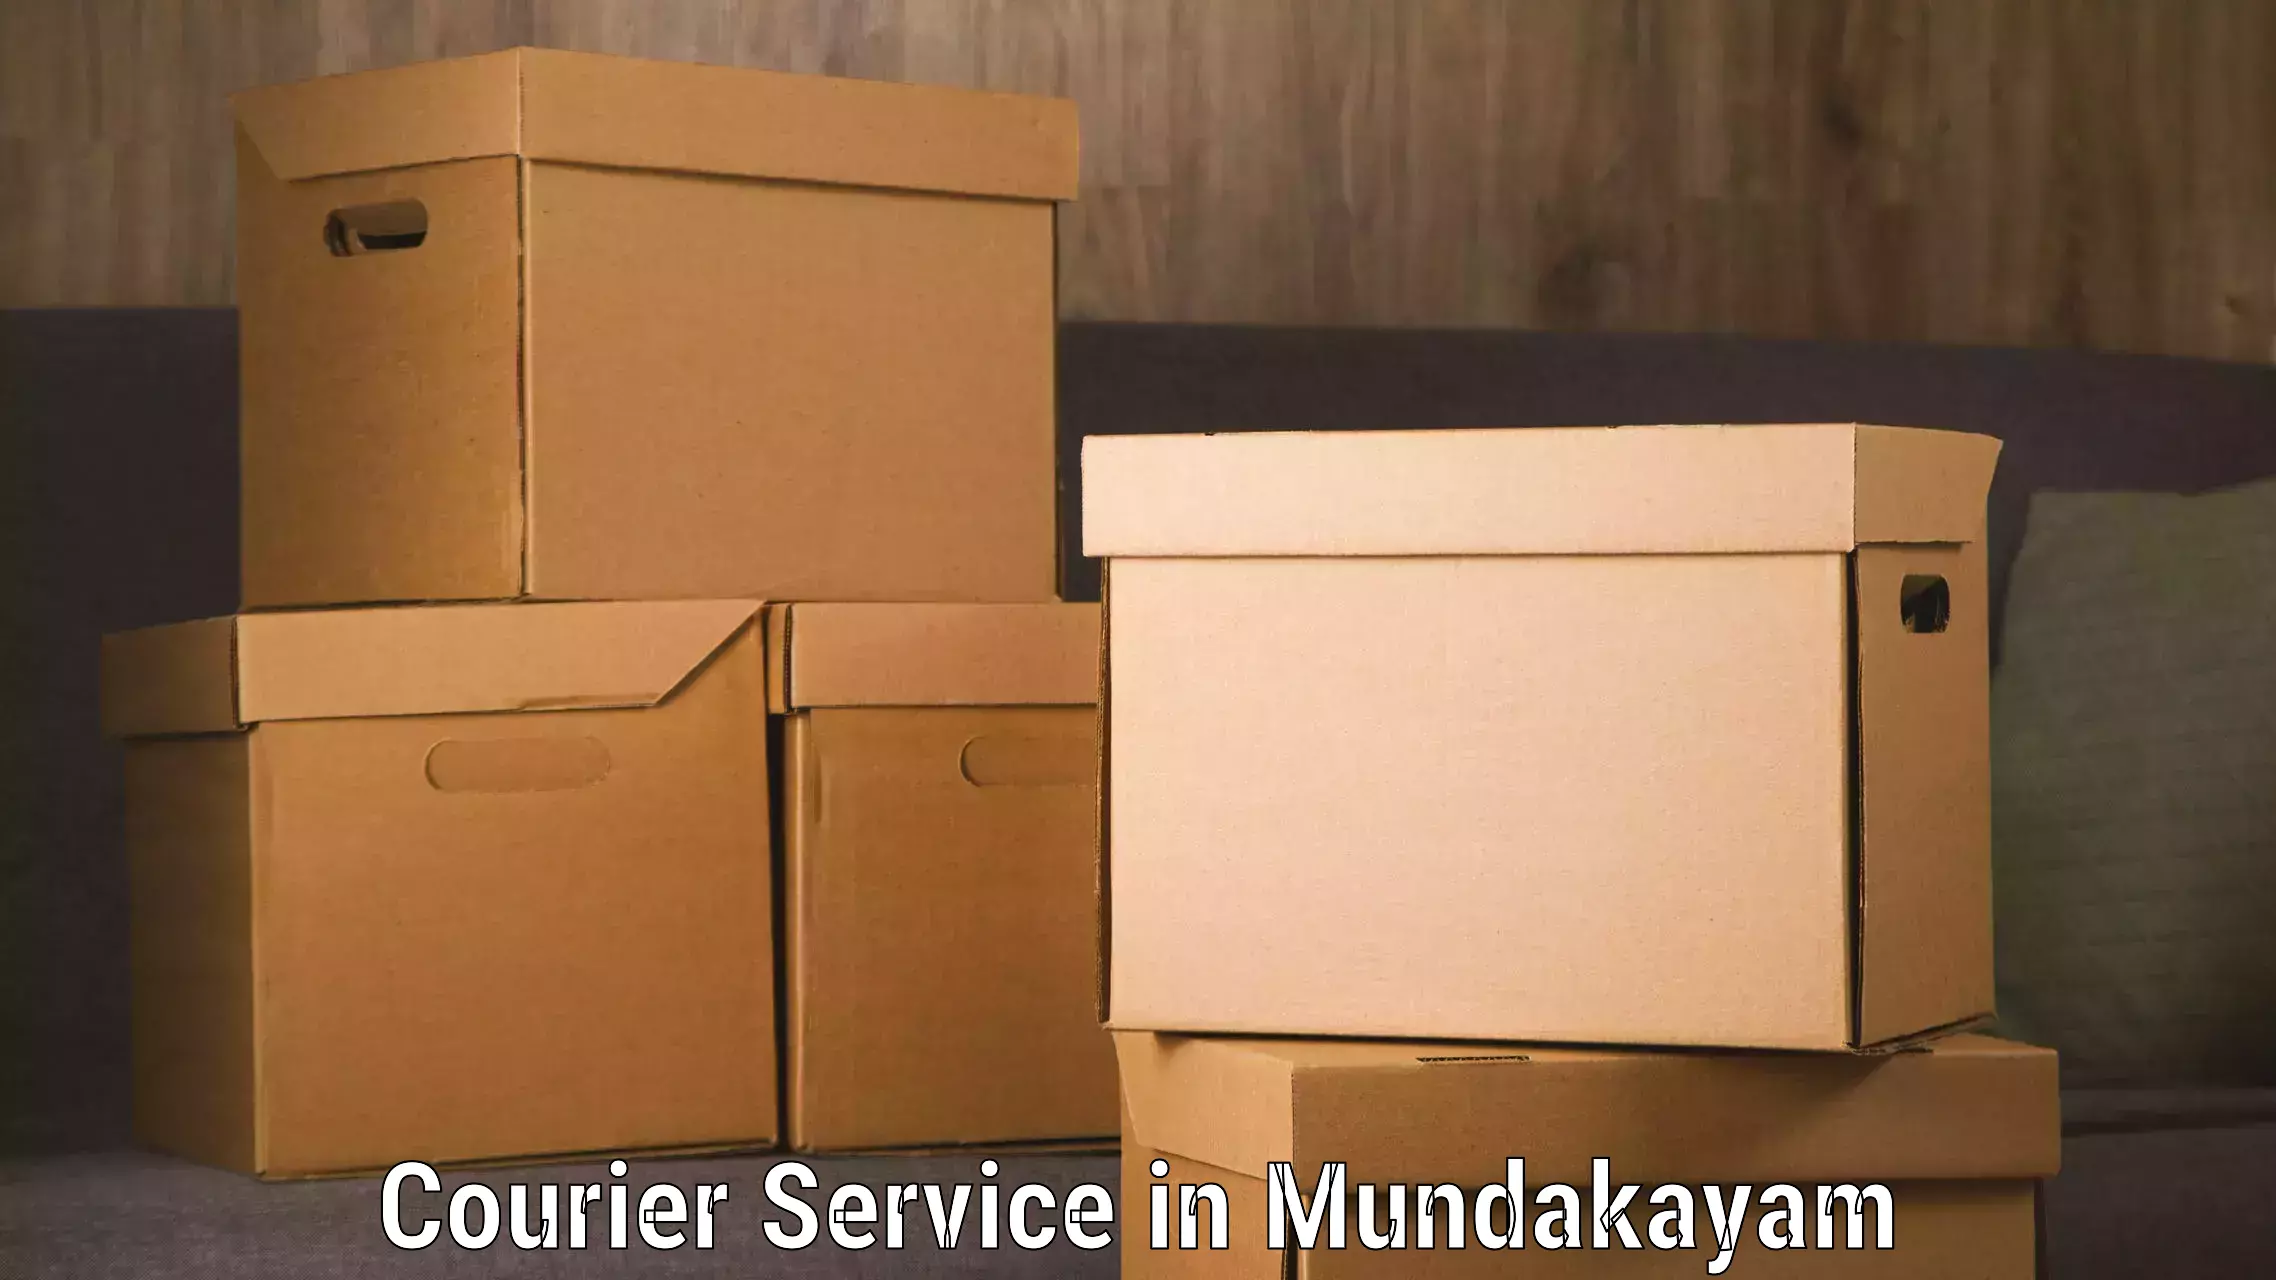 Parcel delivery in Mundakayam